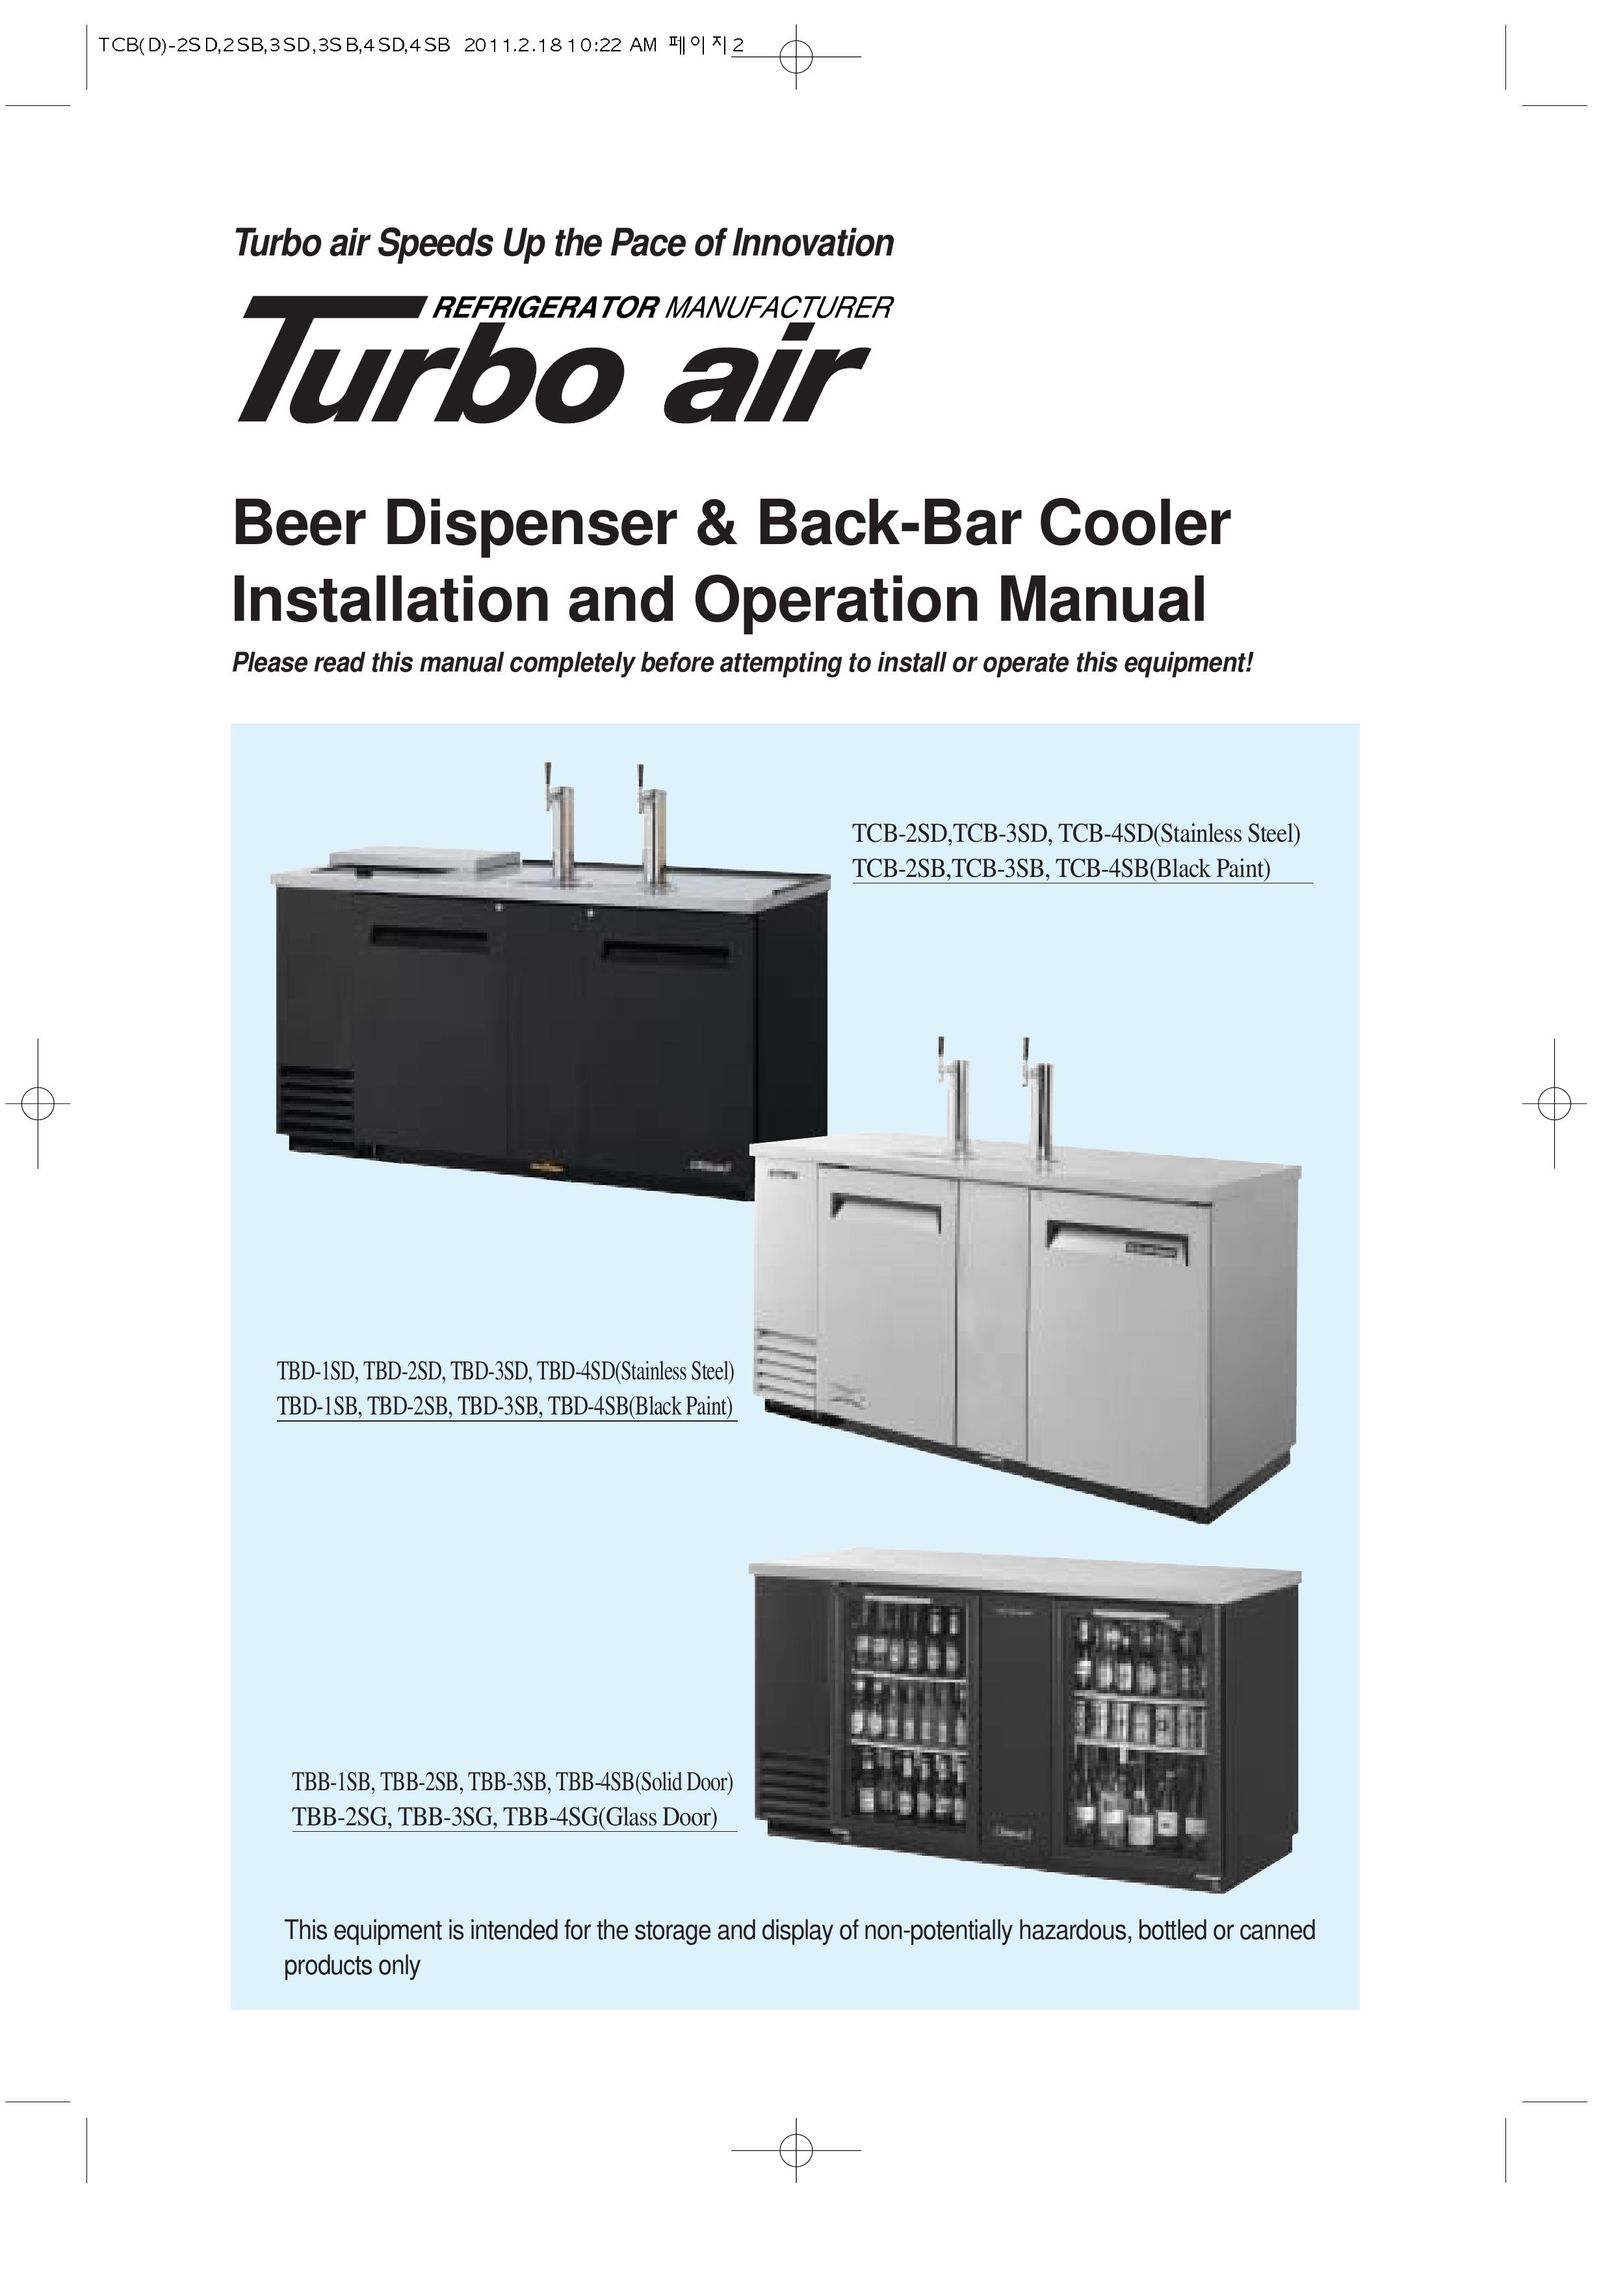 Turbo Air TBD-4SB Beverage Dispenser User Manual